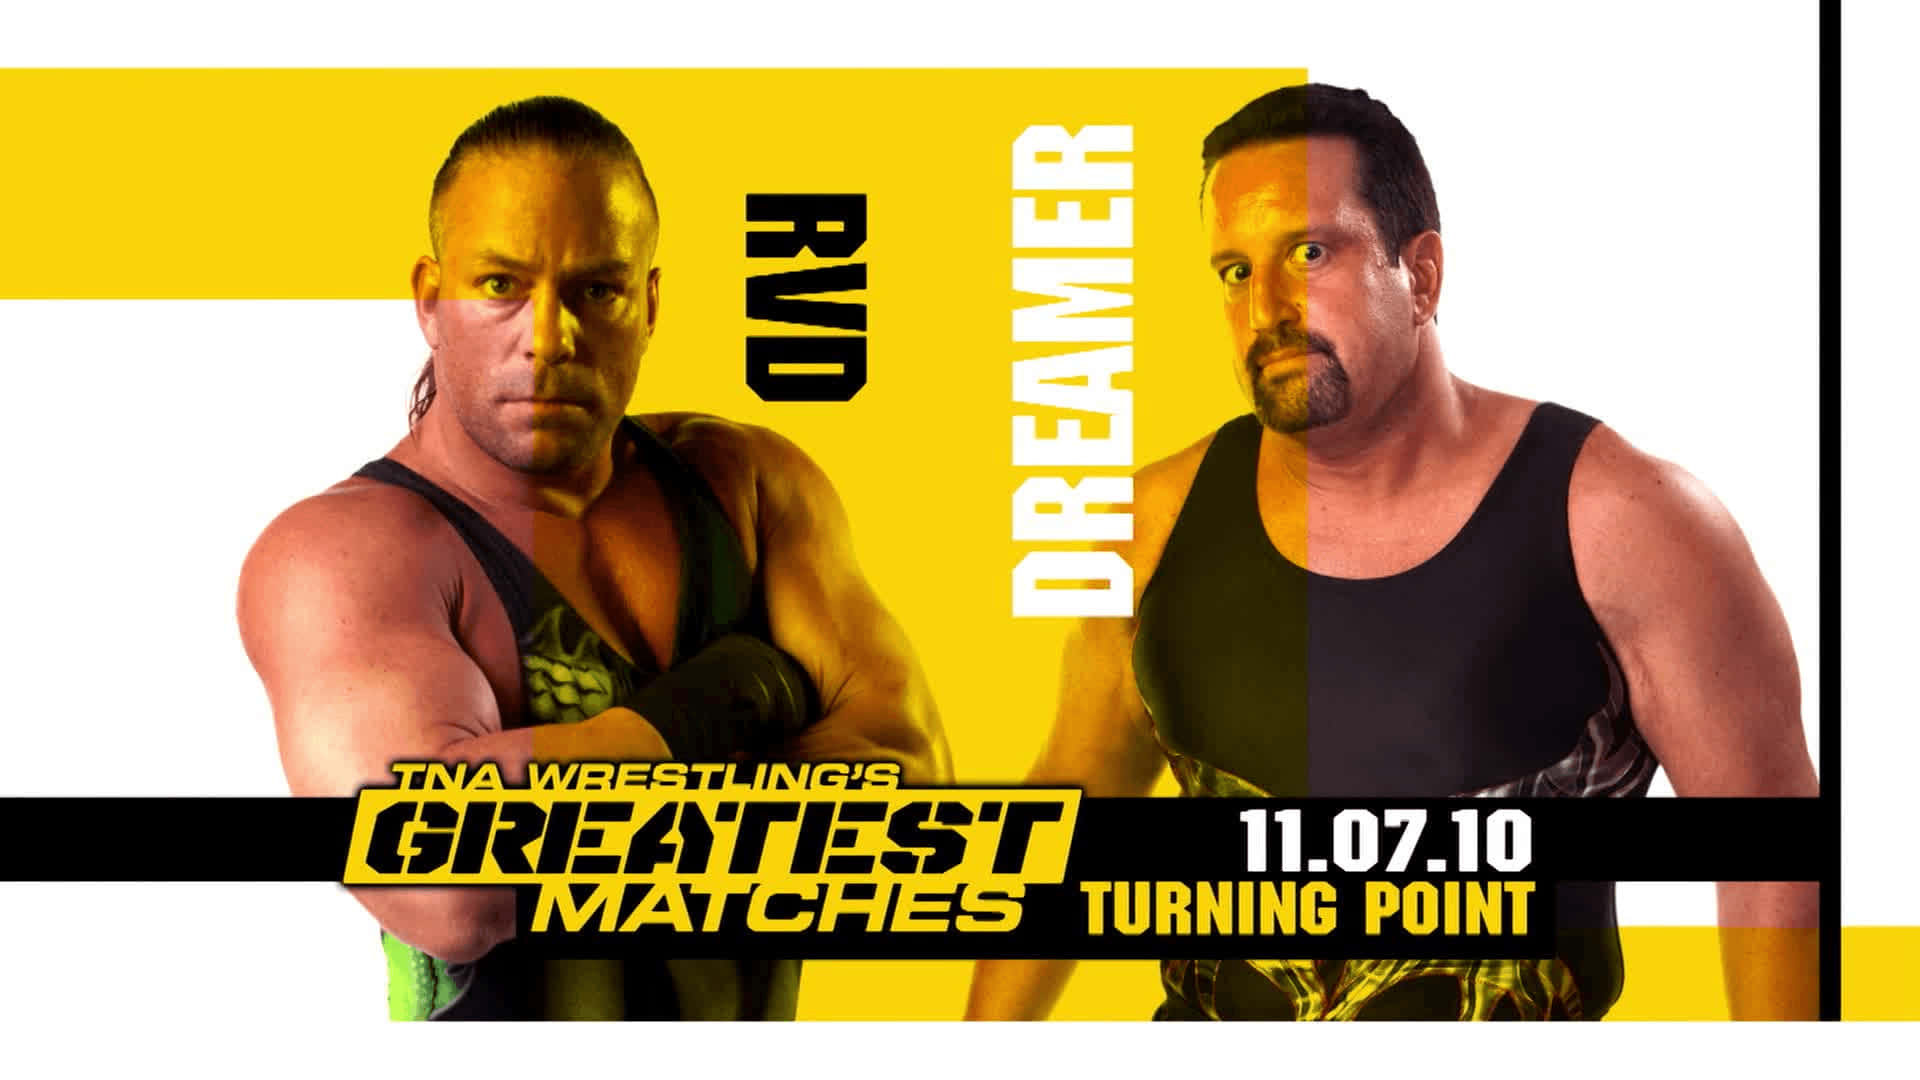 Rob Van Dam Vs Dreamer TNA Wrestling Poster Wallpaper